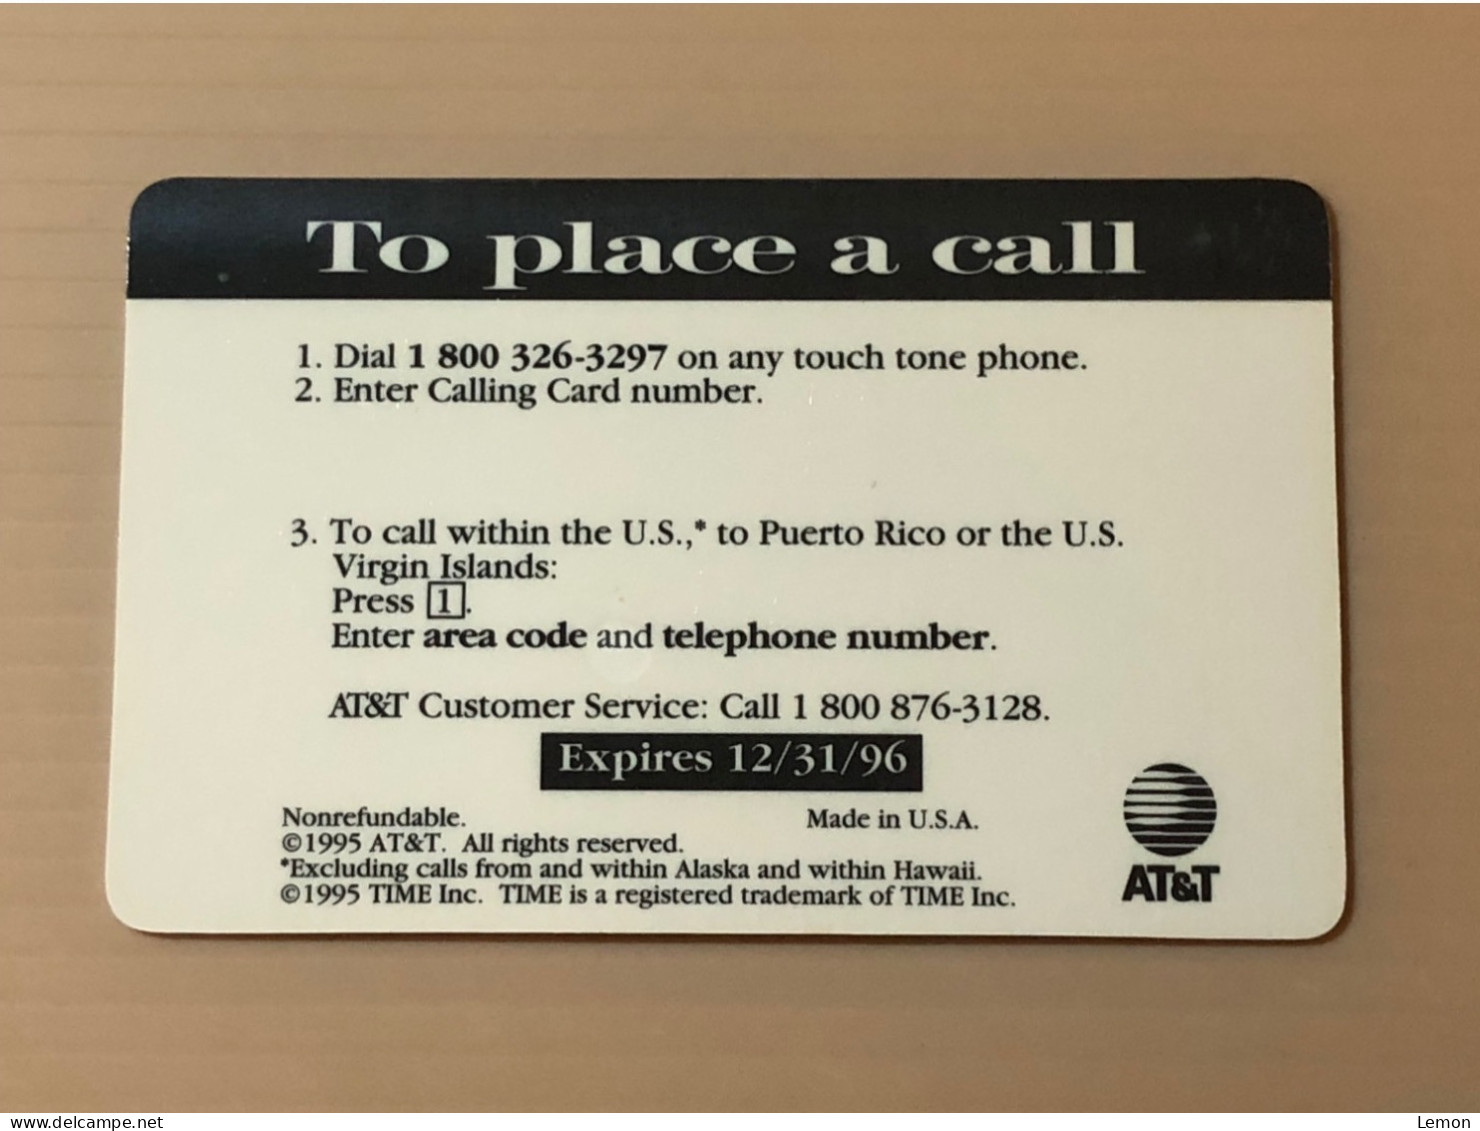 Mint USA UNITED STATES America Prepaid Telecard Phonecard, AT&T TIME Calling Card SAMPLE CARD, Set Of 1 Mint Card - Sammlungen